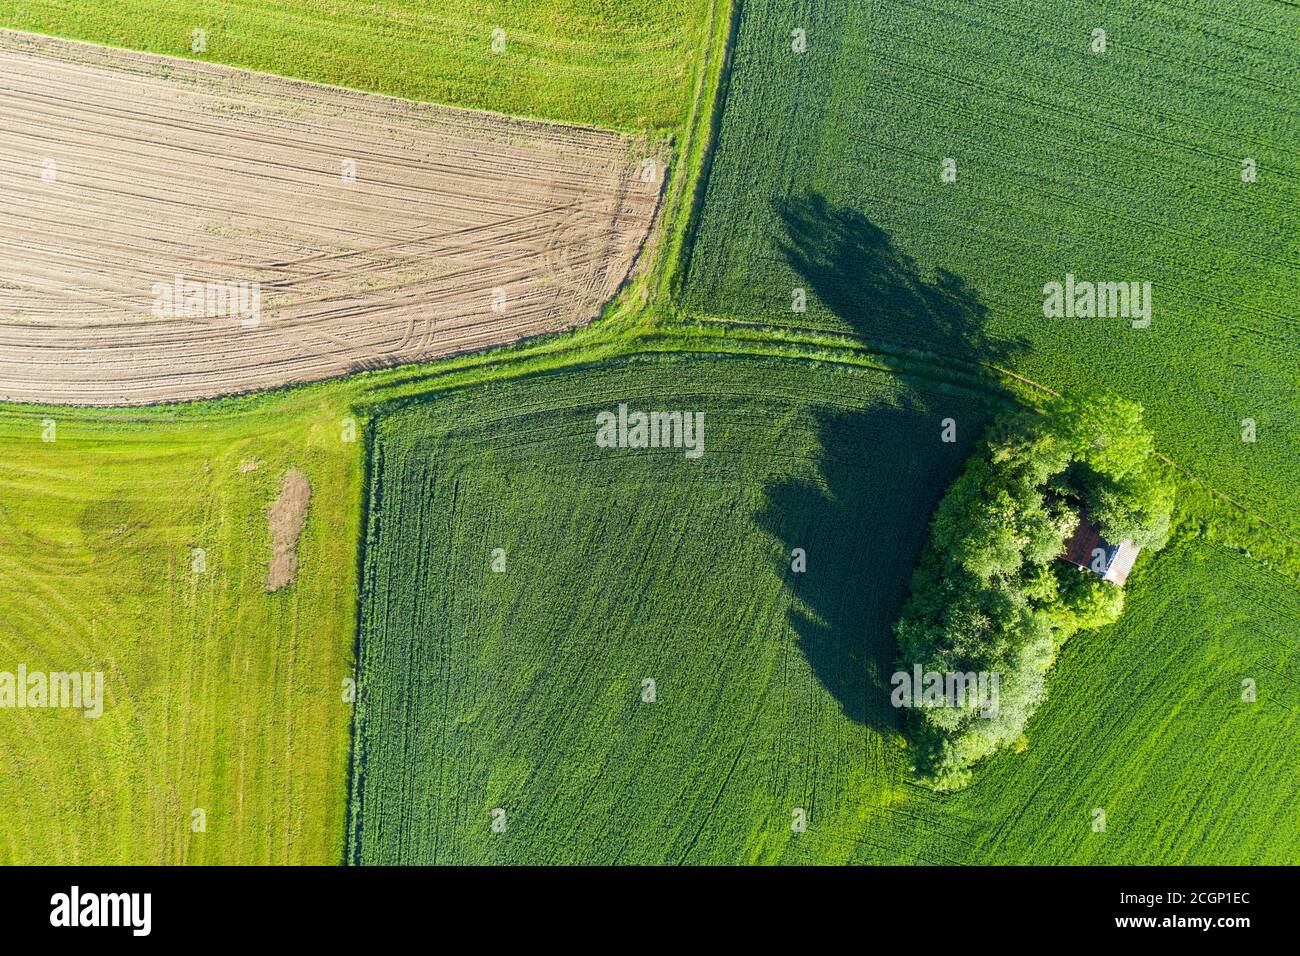 Group of trees in cultural landscape, near Huglfing, Pfaffenwinkel, drone photograph, Upper Bavaria, Bavaria, Germany Stock Photo